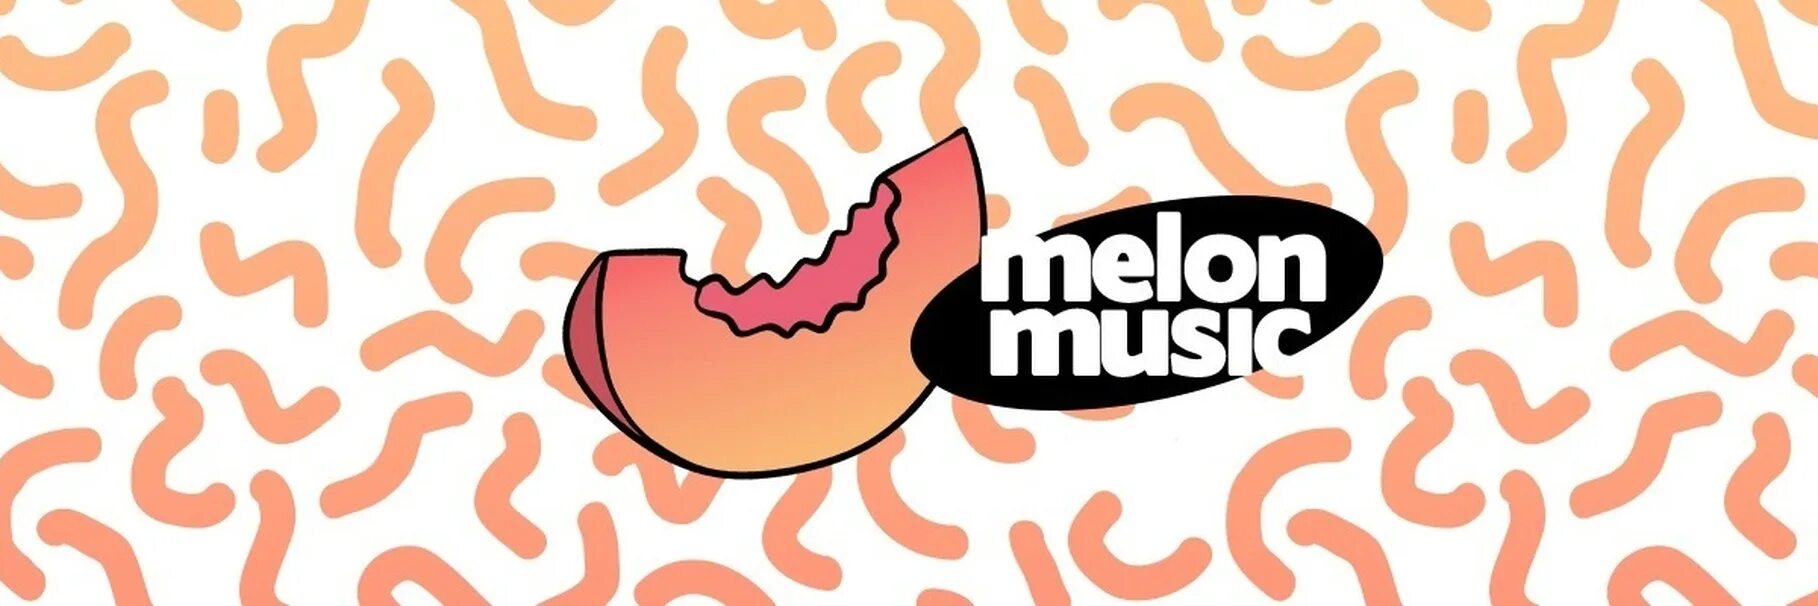 Мелон 21.5. Melon Music. 163 Мелон Мьюзик. Melon Music логотип. Мелом Мьюзик.